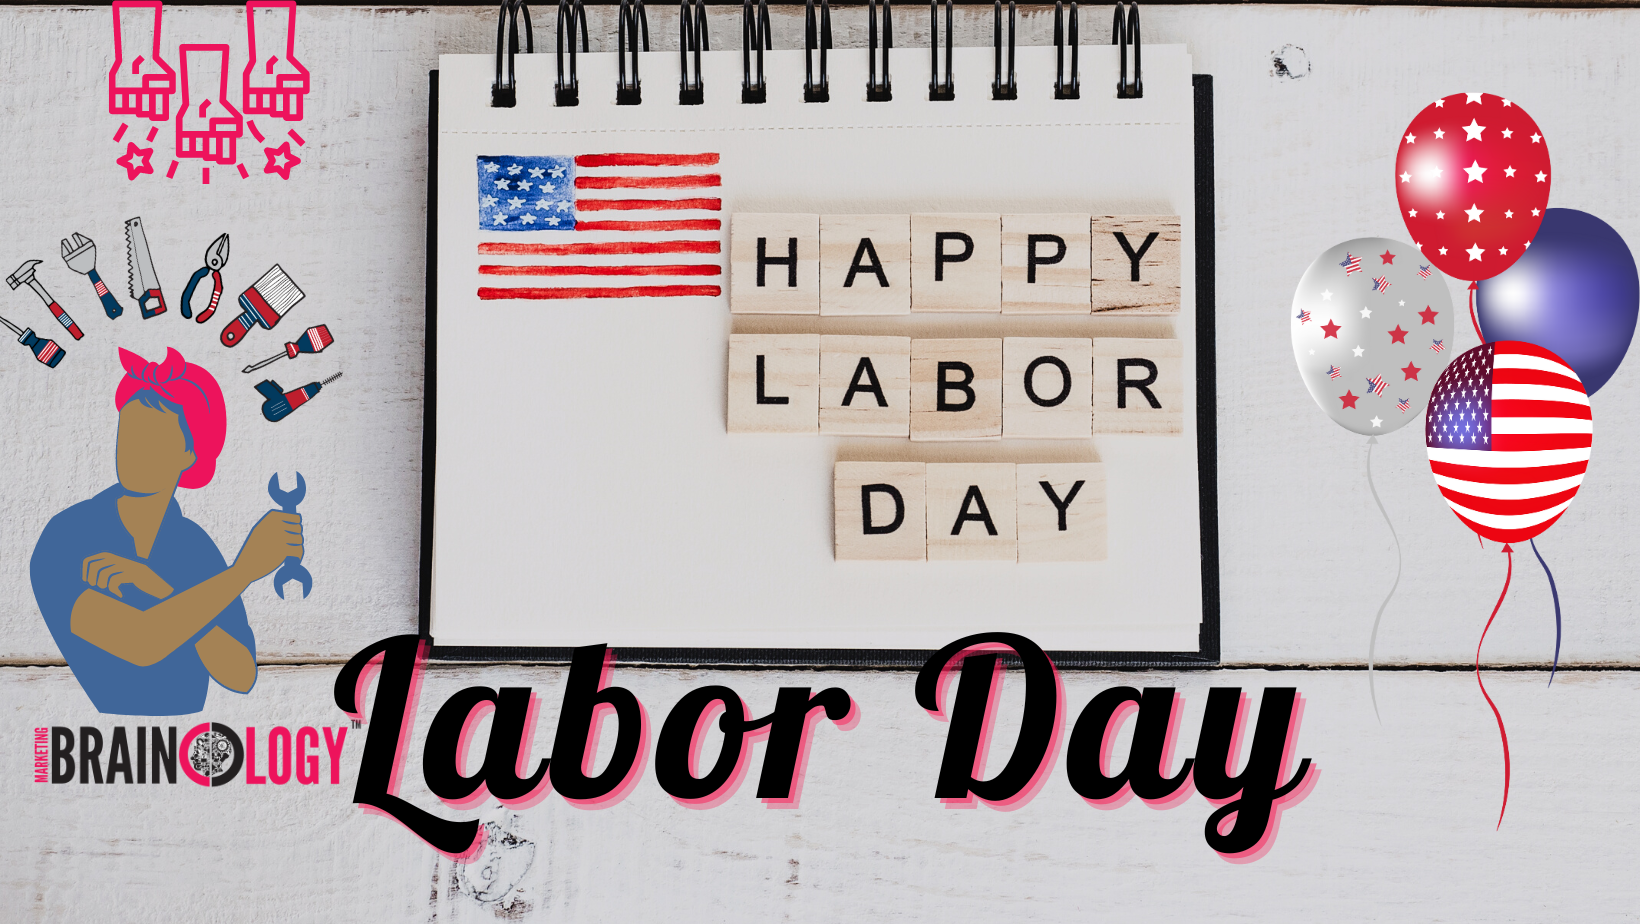 Happy Labor Day from Marketing Brainology !